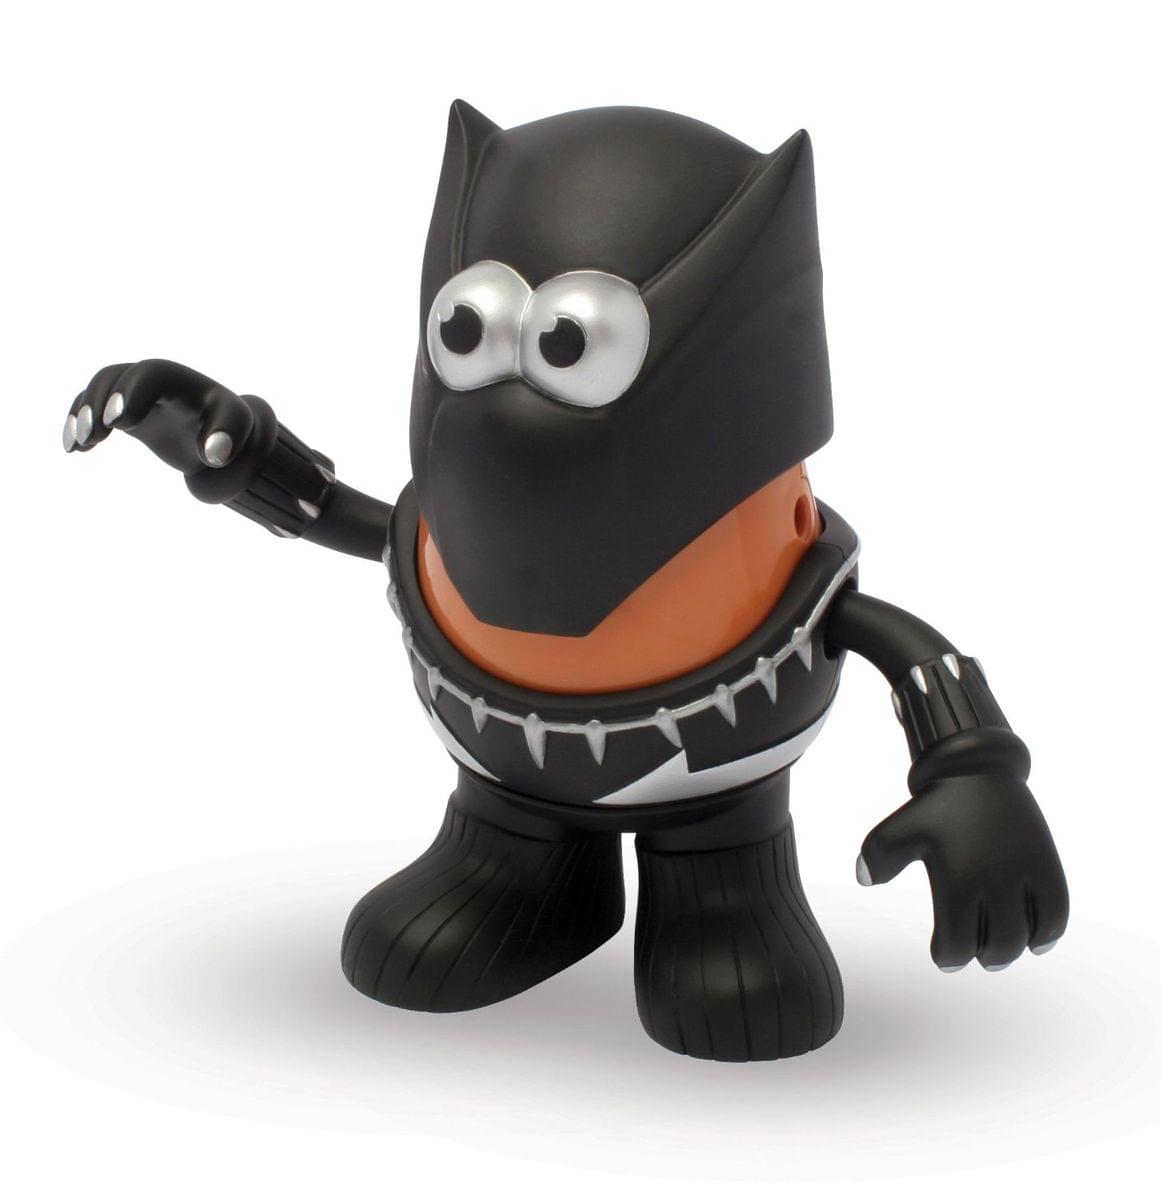 Marvel Mr. Potato Head PopTater: Black Panther